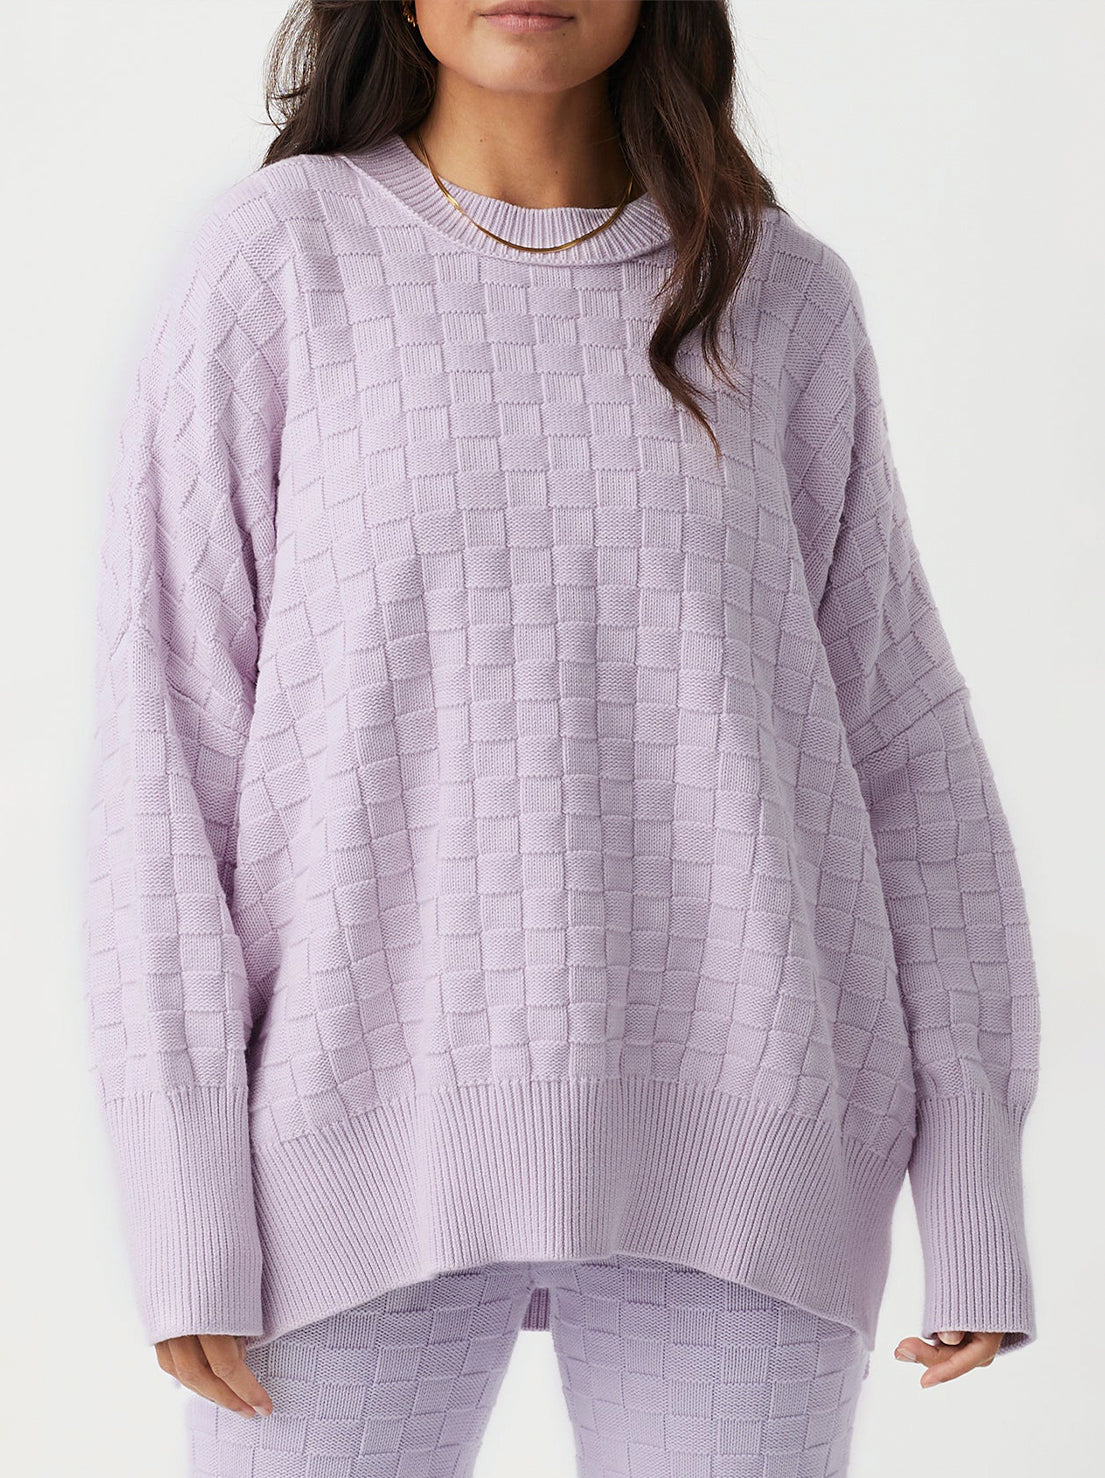 Arcaa Movement - Sierra Organic Knit Sweater - Lilac